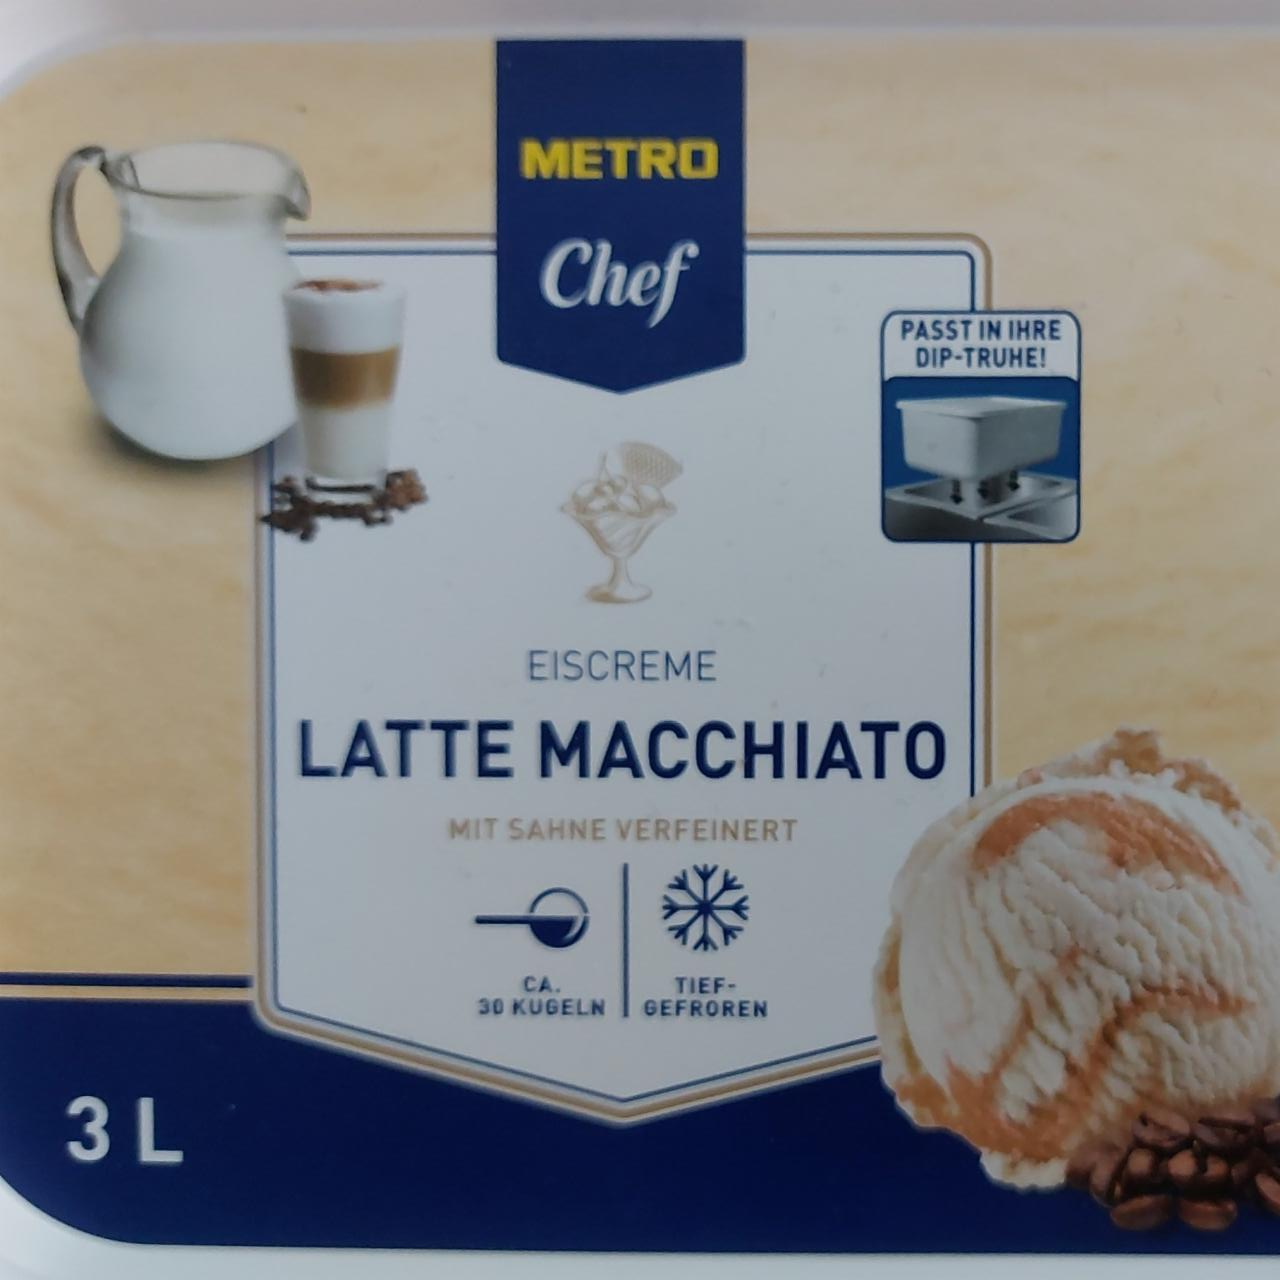 Fotografie - Eiscreme Latte Macchiato Metro Chef